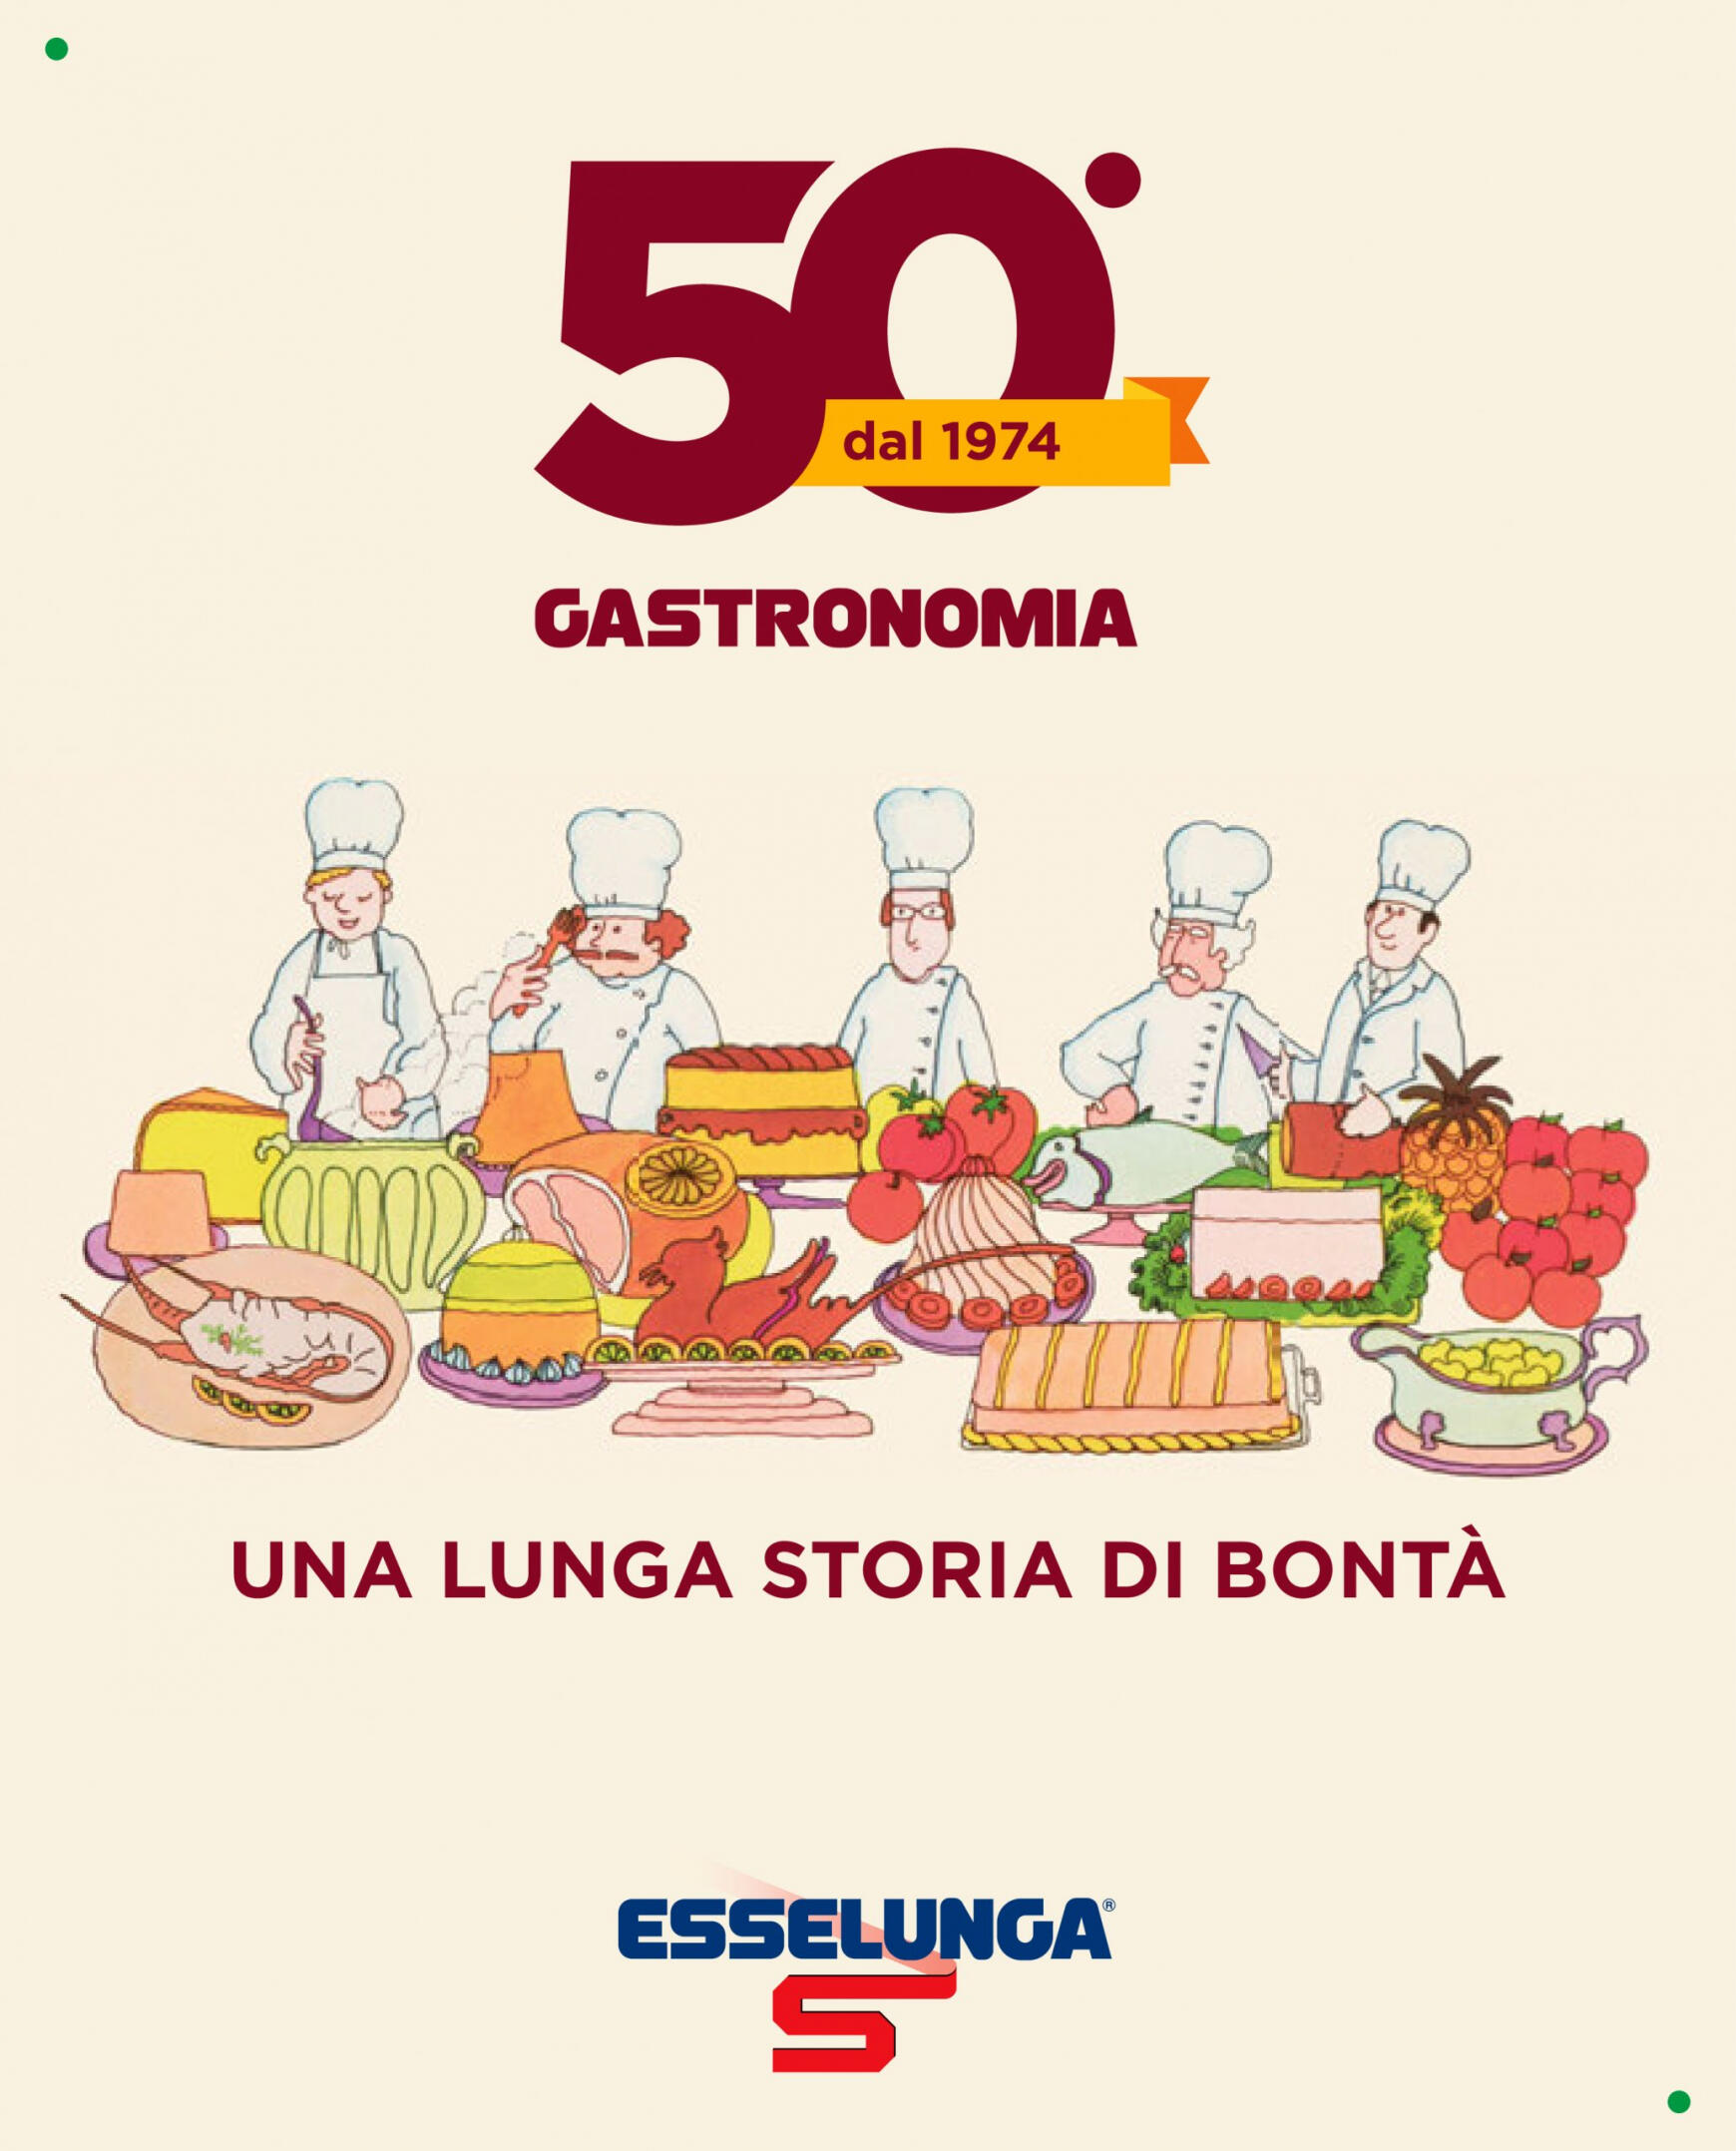 esselunga - Nuovo volantino Esselunga - 50° Anniversario Gastronomia 13.05. - 05.06.